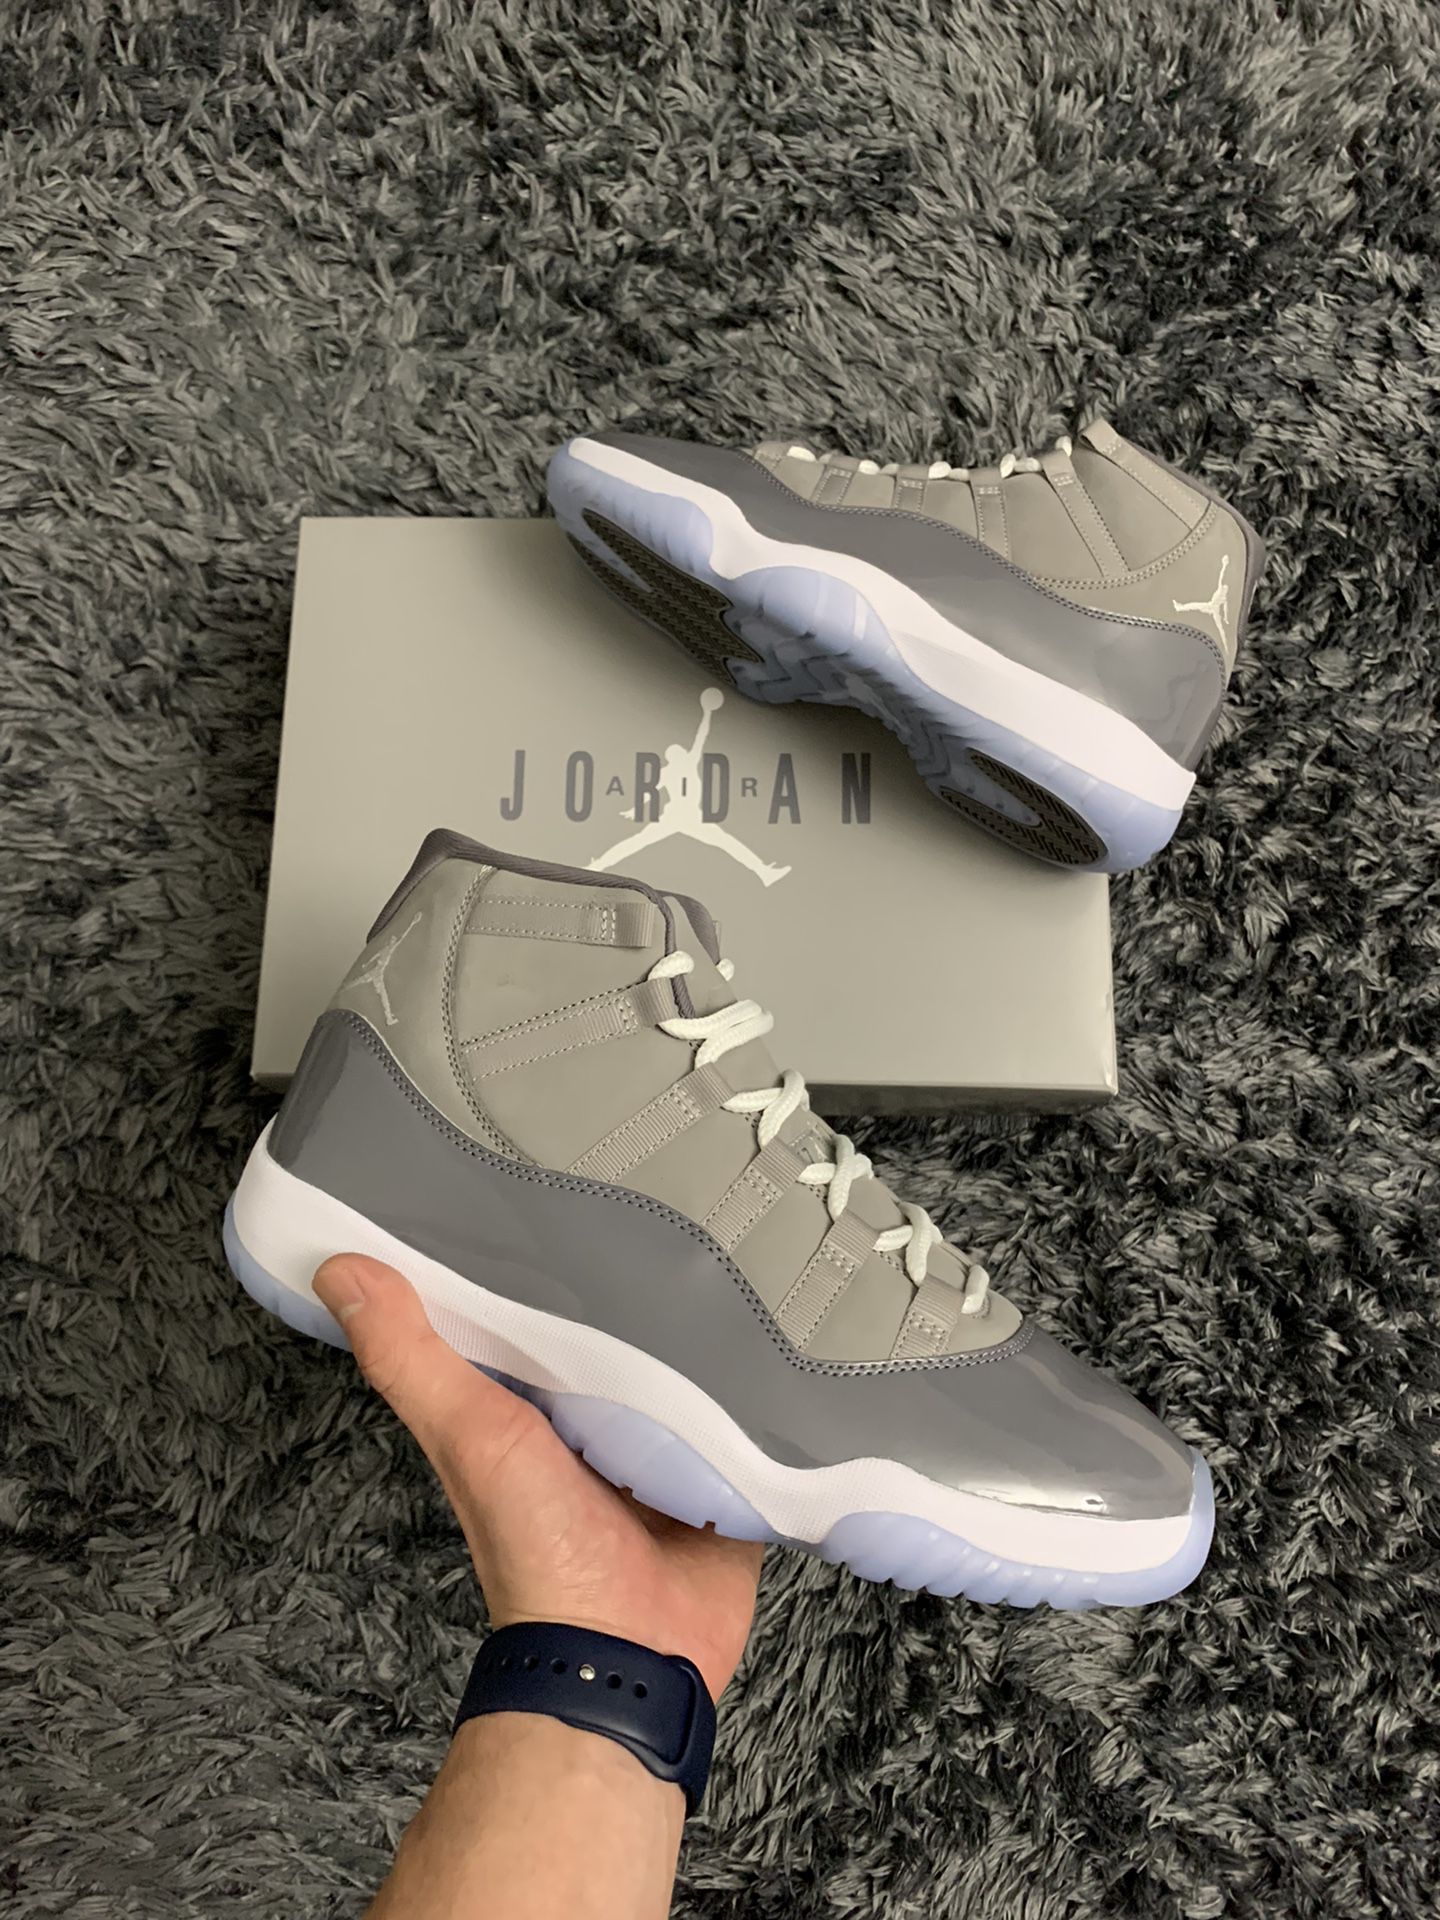 Brand New Jordan 11 Cool Grey Size 9.5